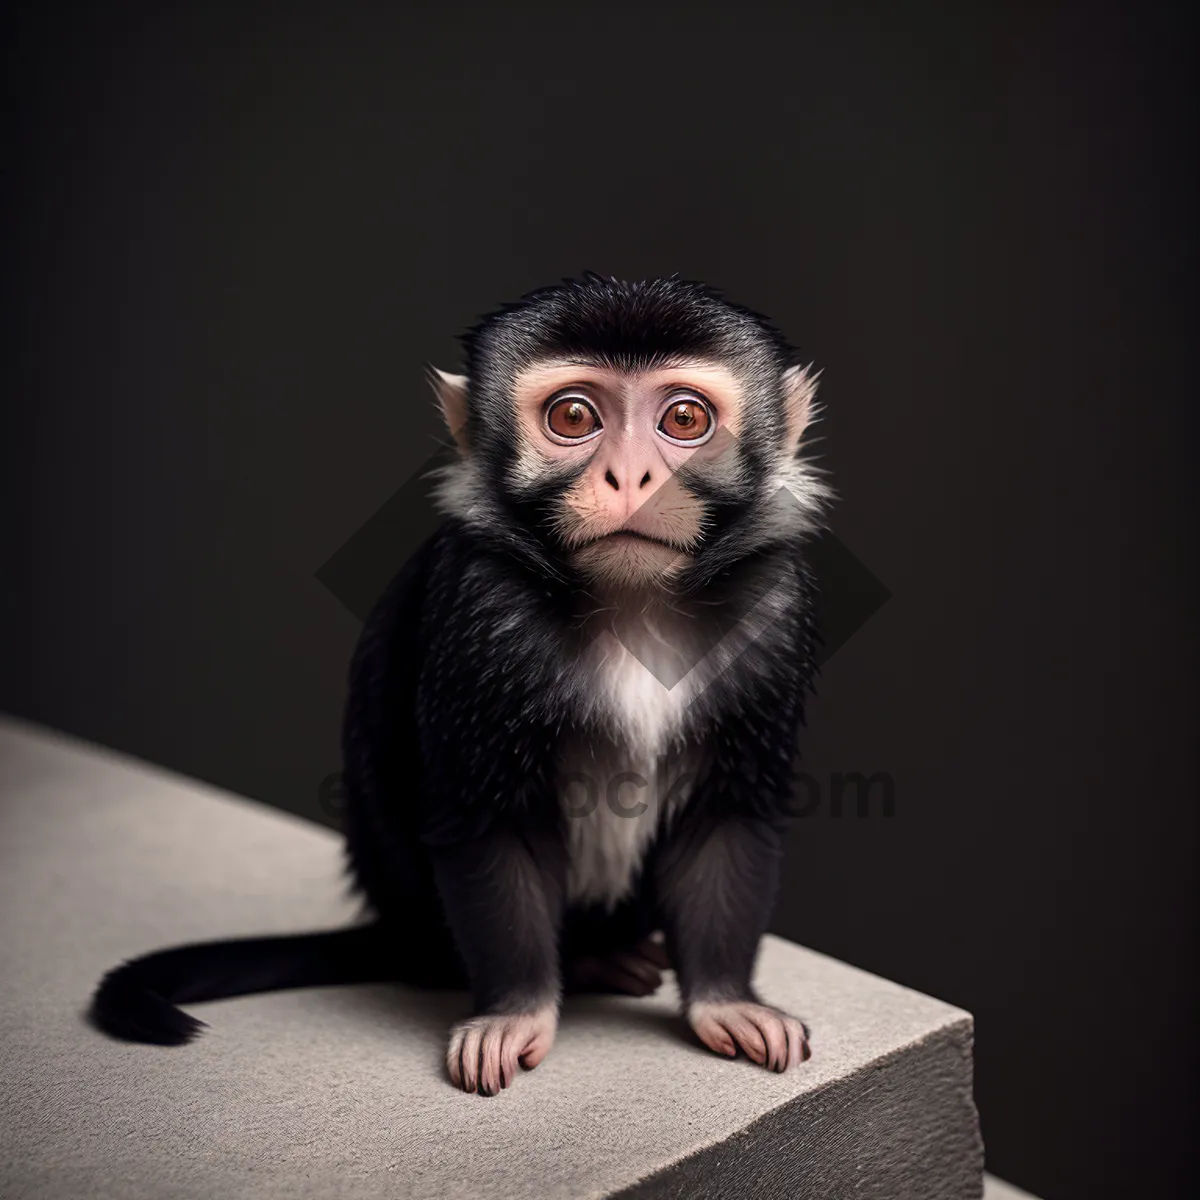 Picture of Cute Primate Monkey Portrait in the Wild